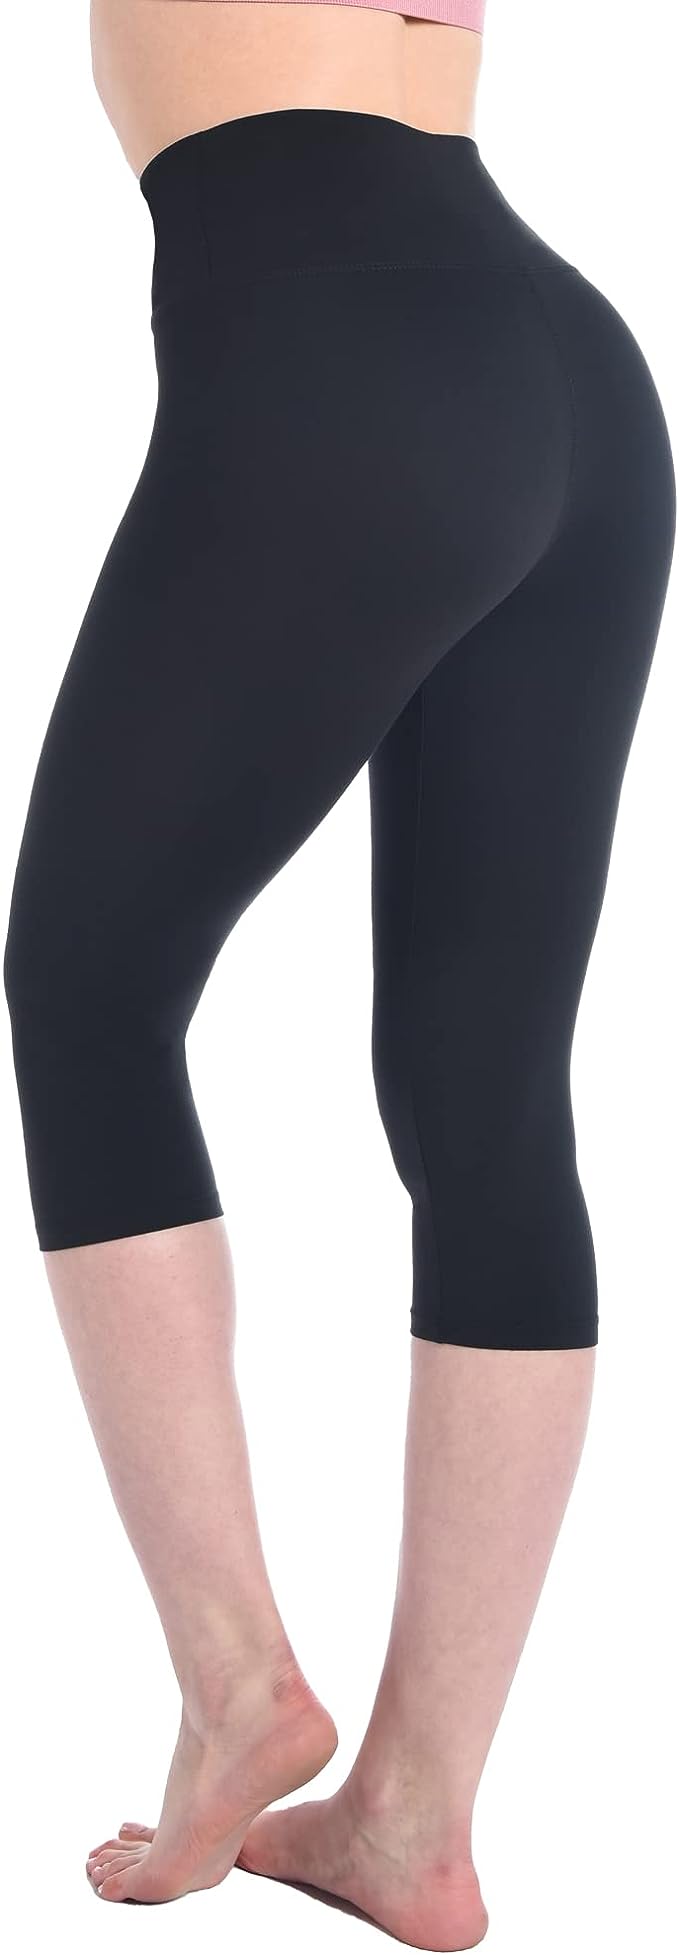 Women's High Waist 3/4 Leggings Opaque Black for Sports Gym Yoga